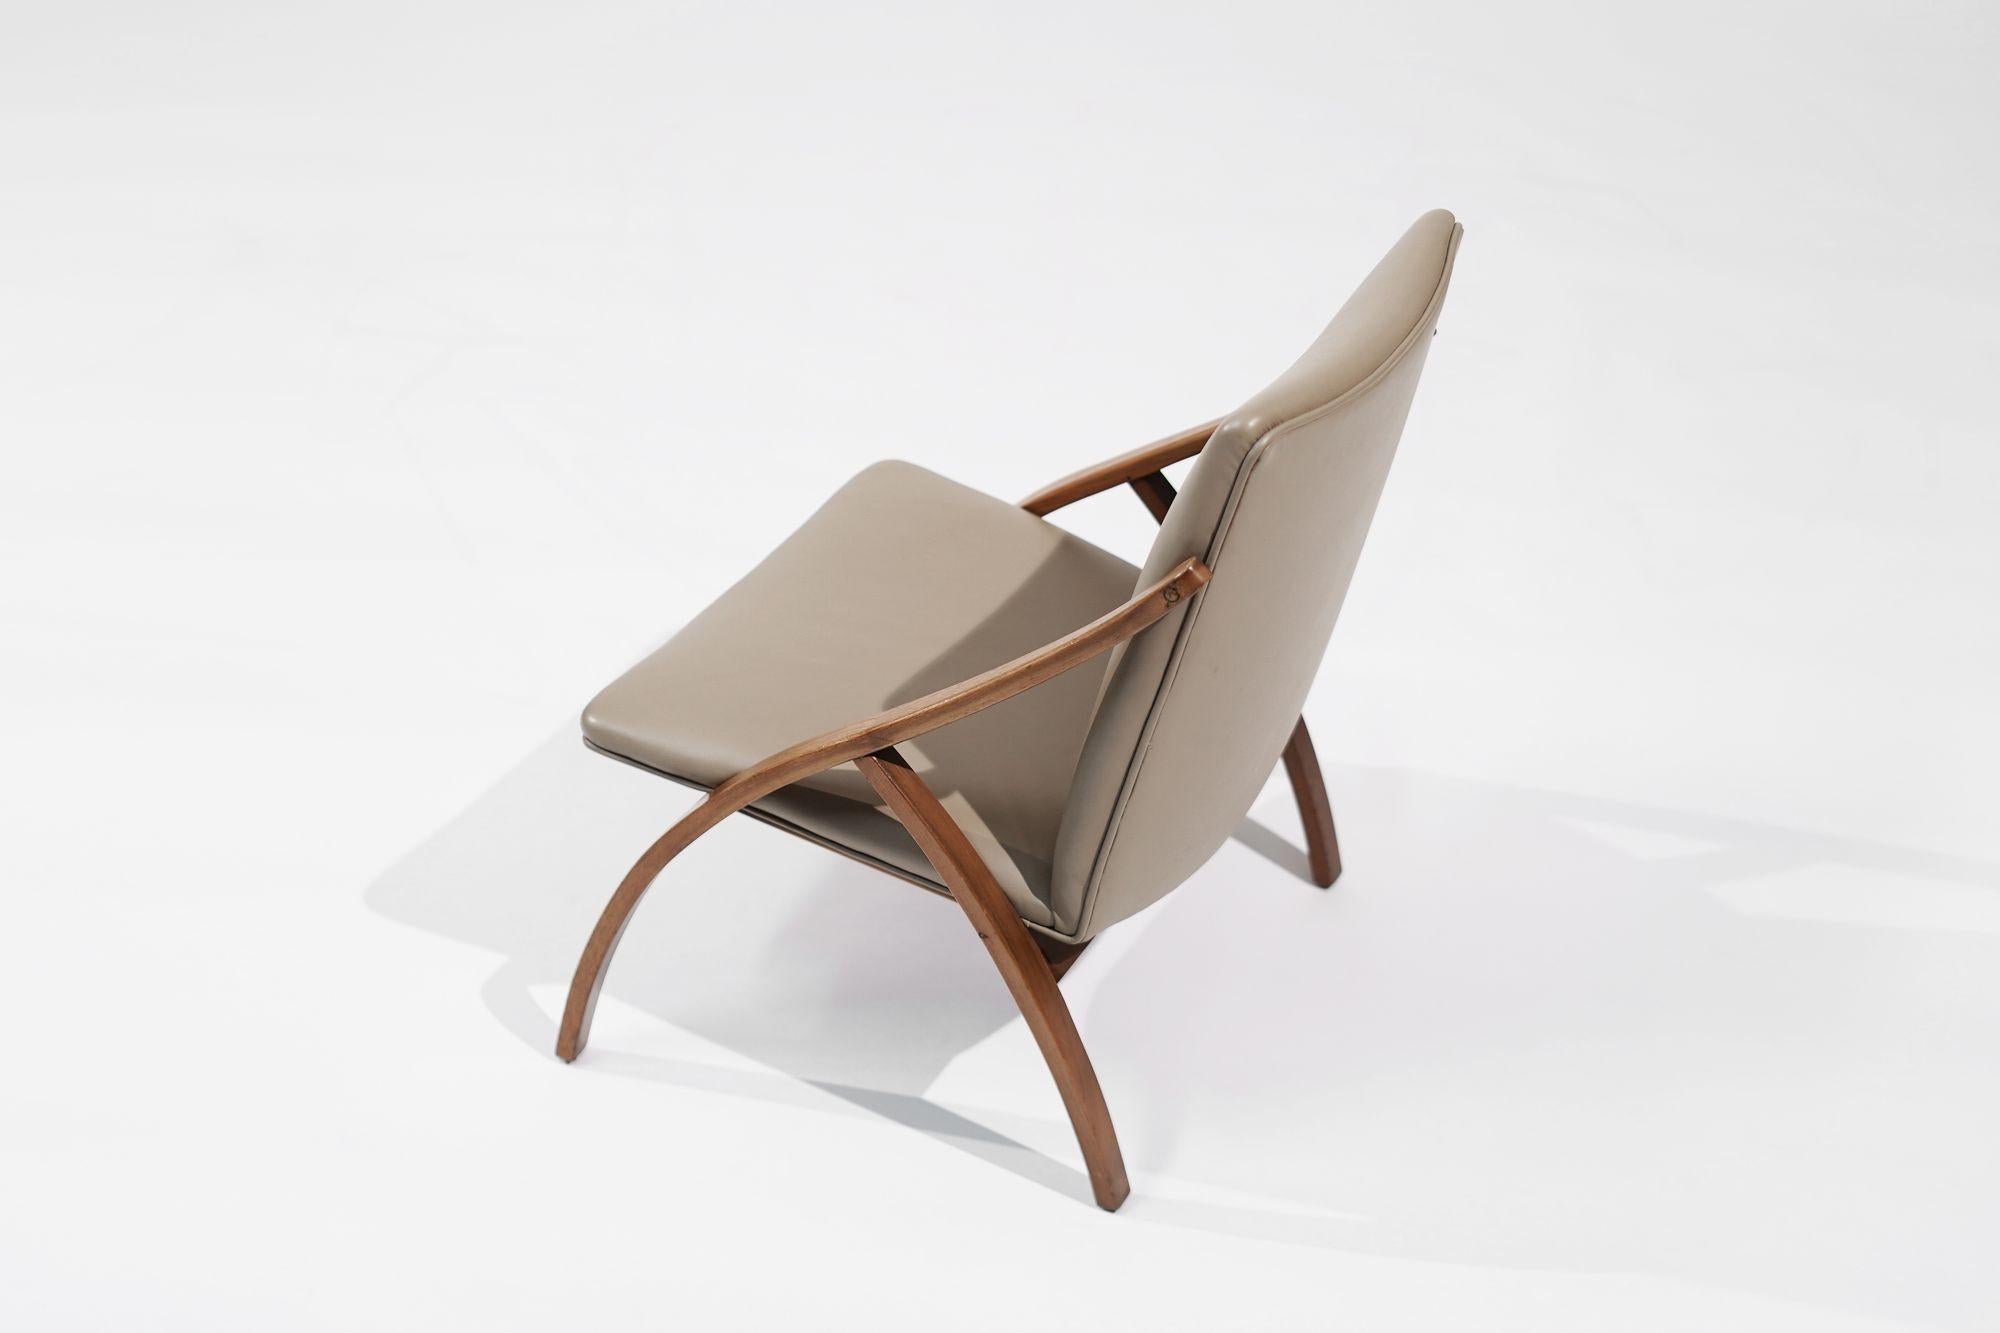 20th Century Sculptural Bent Teak Lounge Chair, Sweden, C. 1950s For Sale